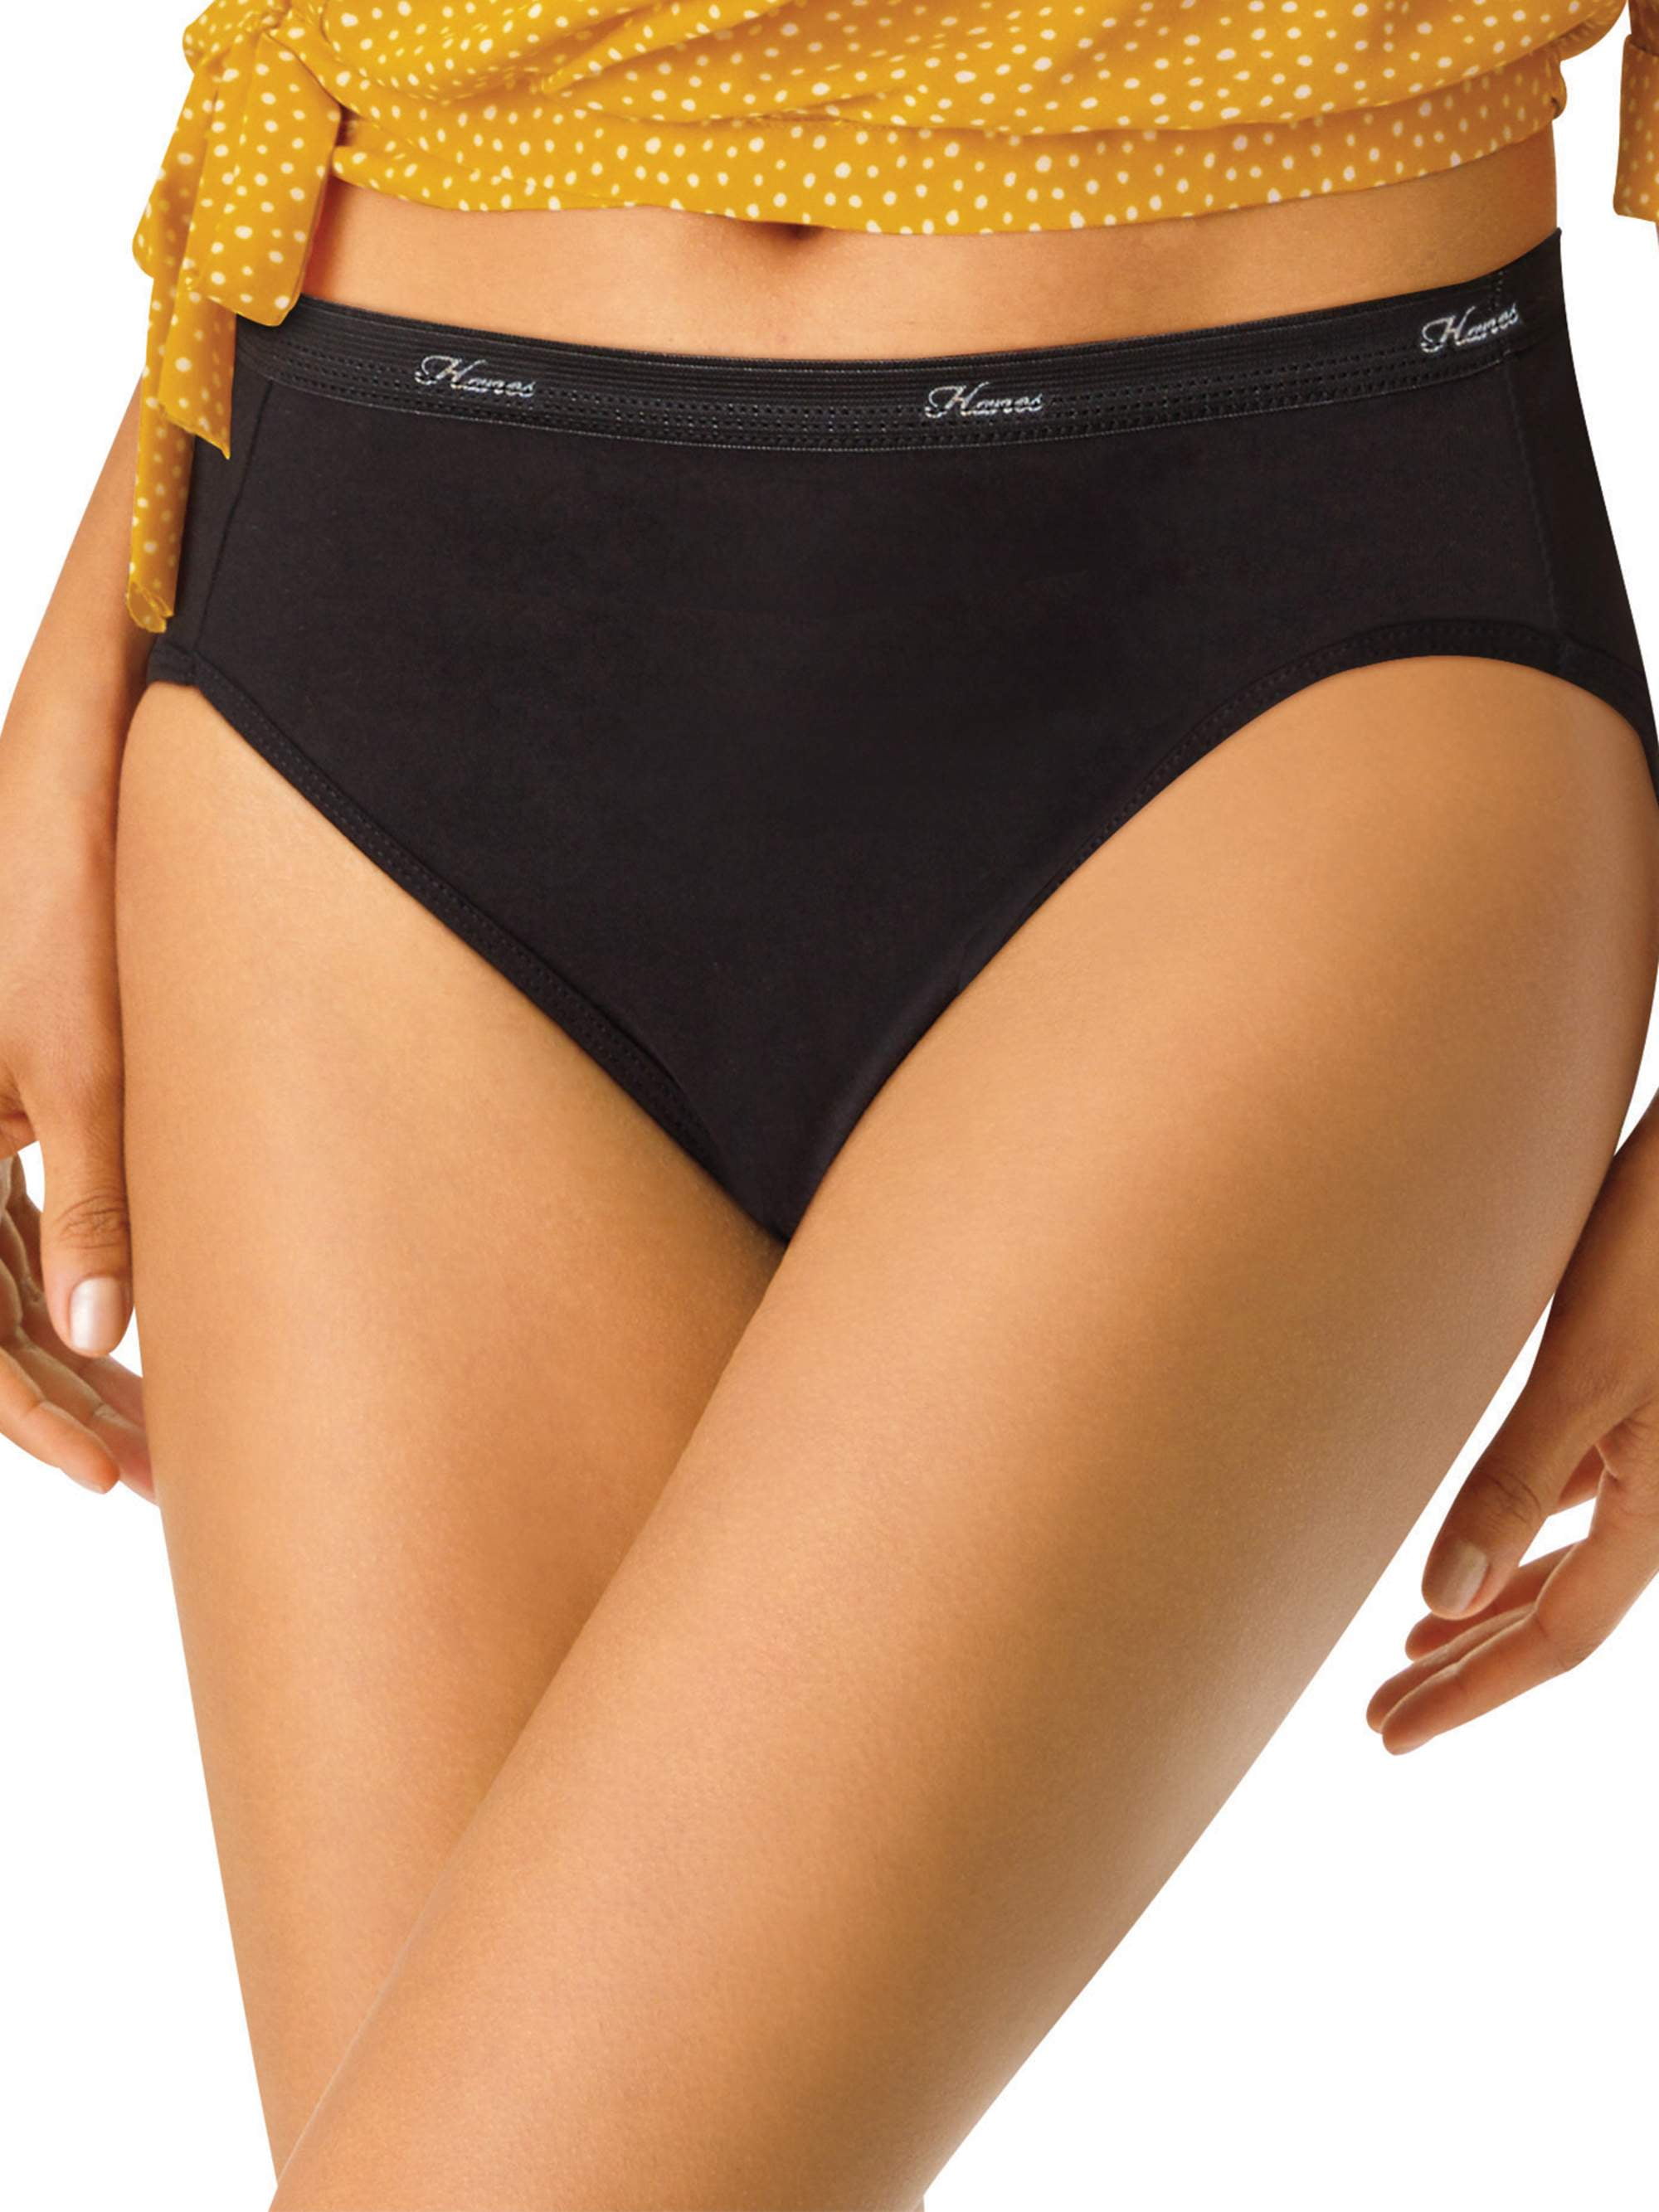 Hanes - Hanes Women's SUPER VALUE Cool Comfort Cotton Hi-Cut Underwear